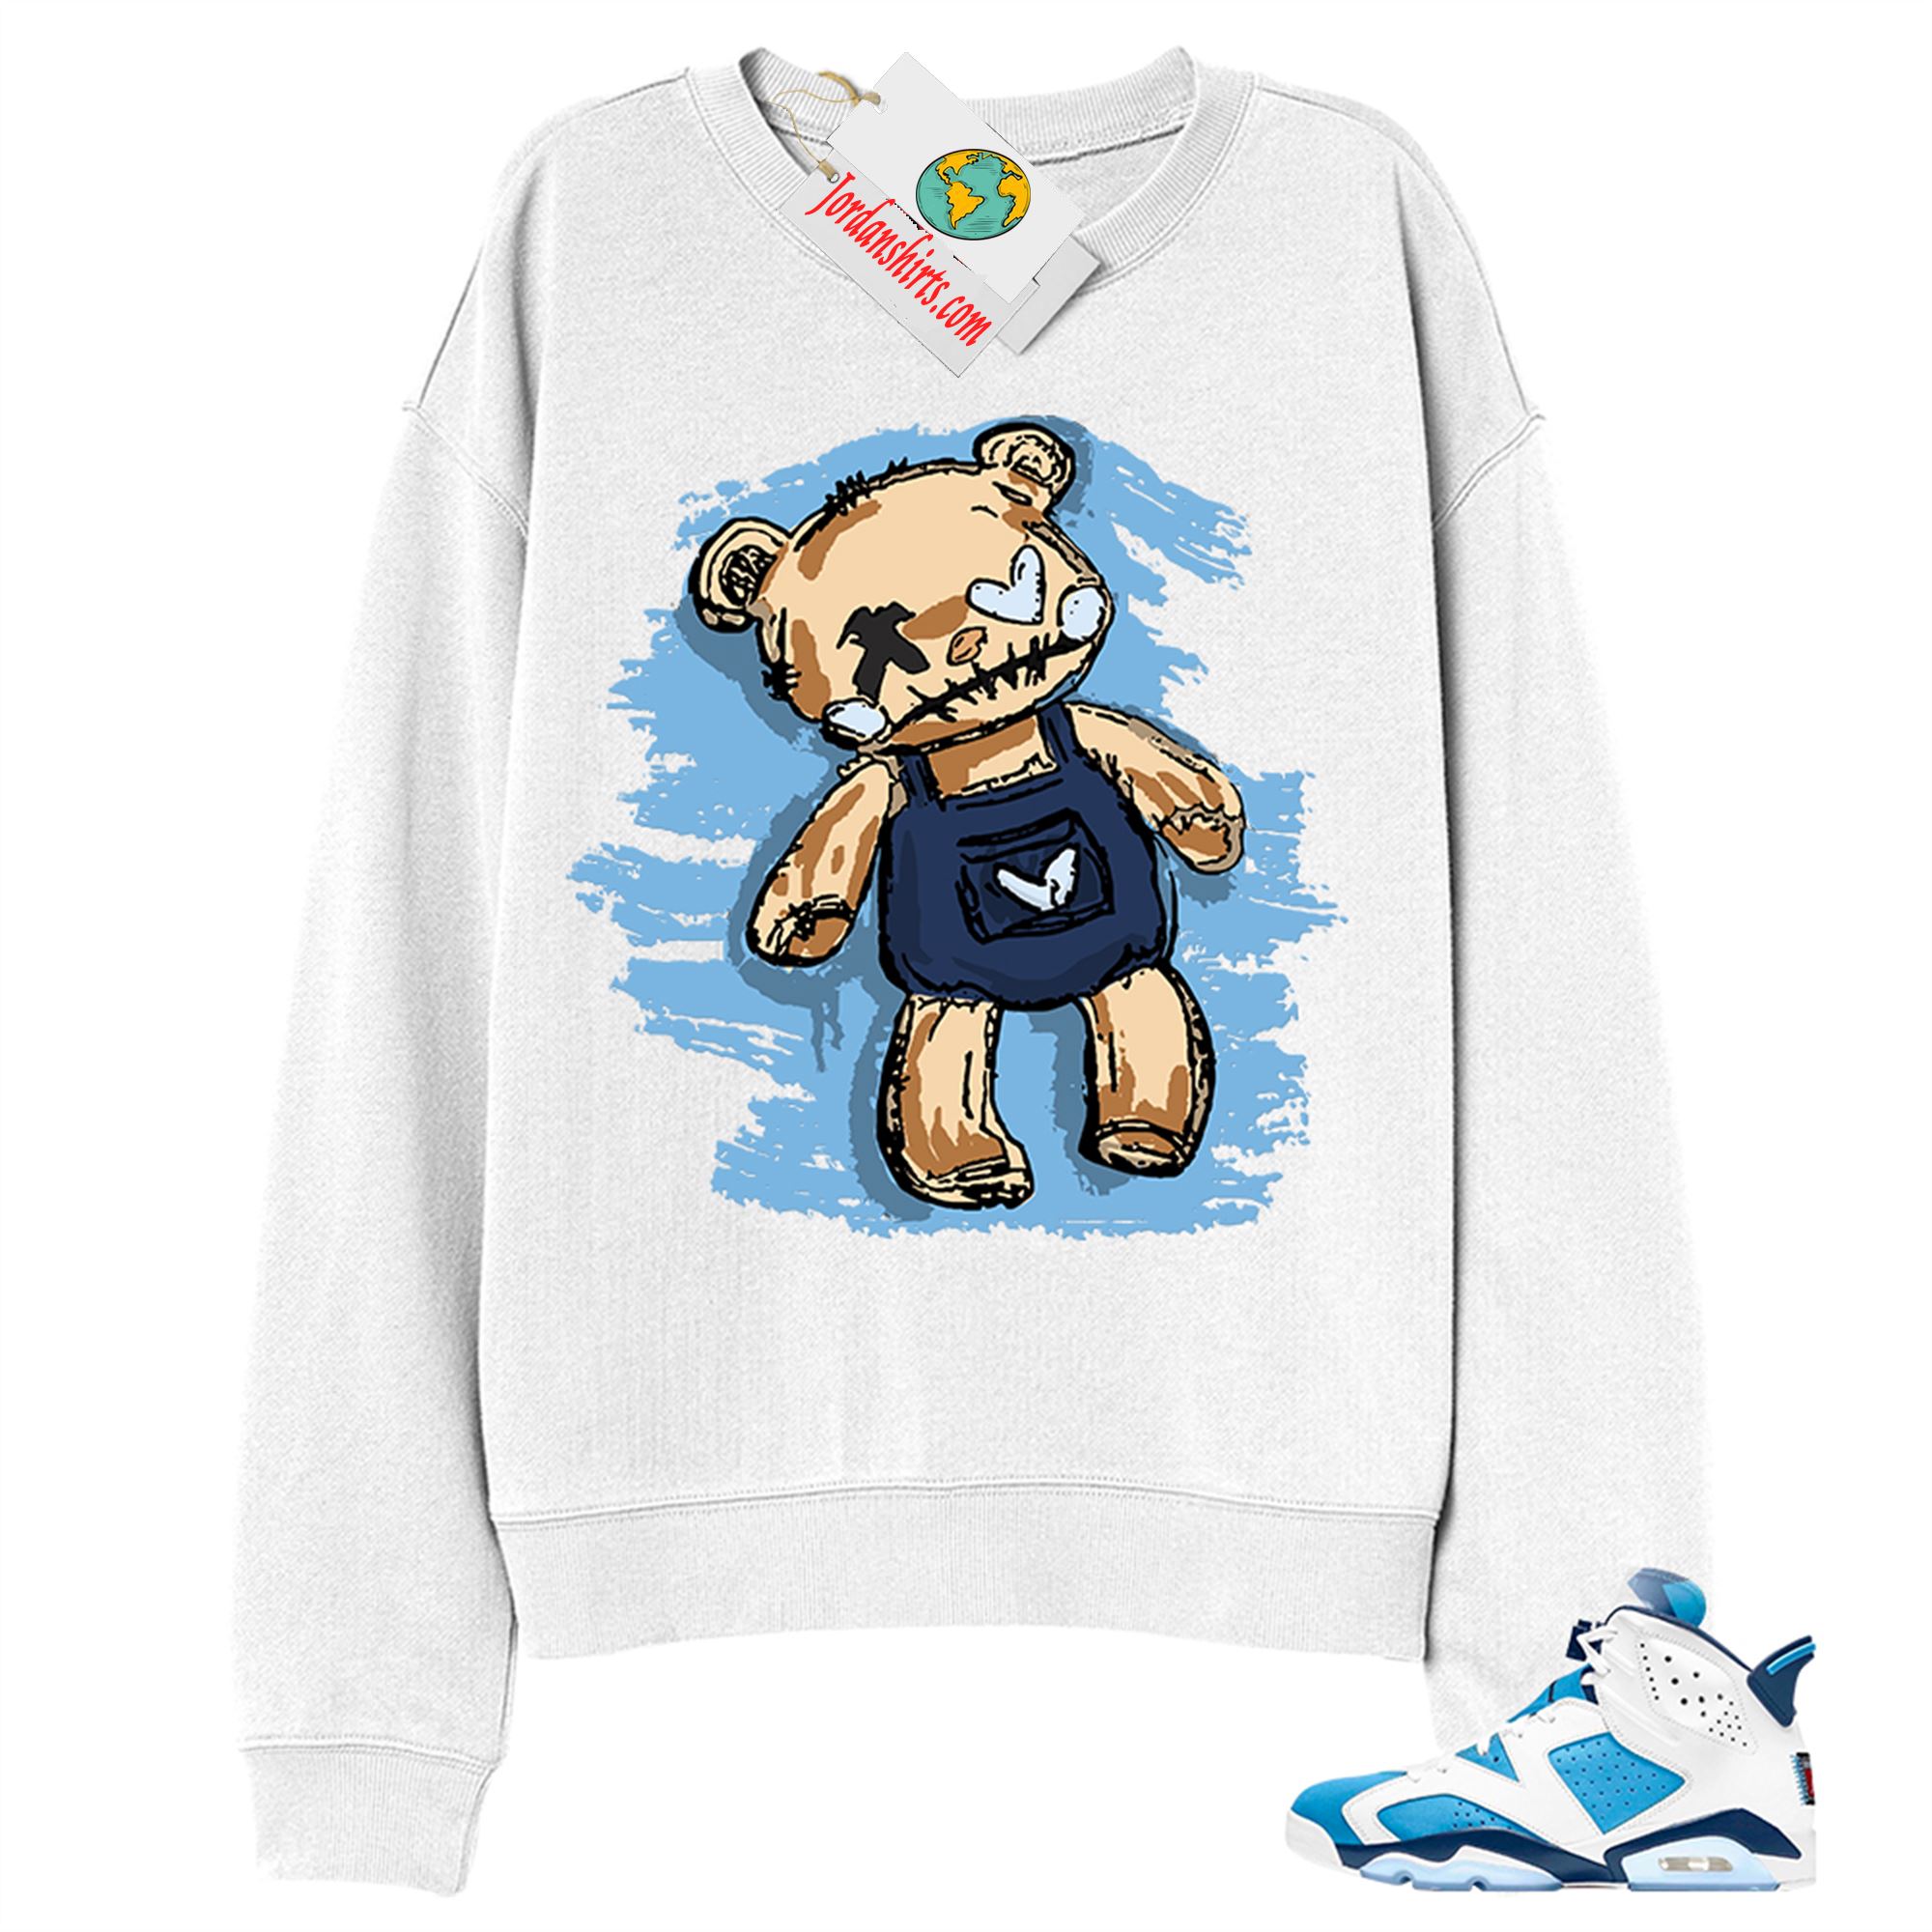 Jordan 6 Sweatshirt, Teddy Bear Broken Heart White Sweatshirt Air Jordan 6 Unc 6s Size Up To 5xl